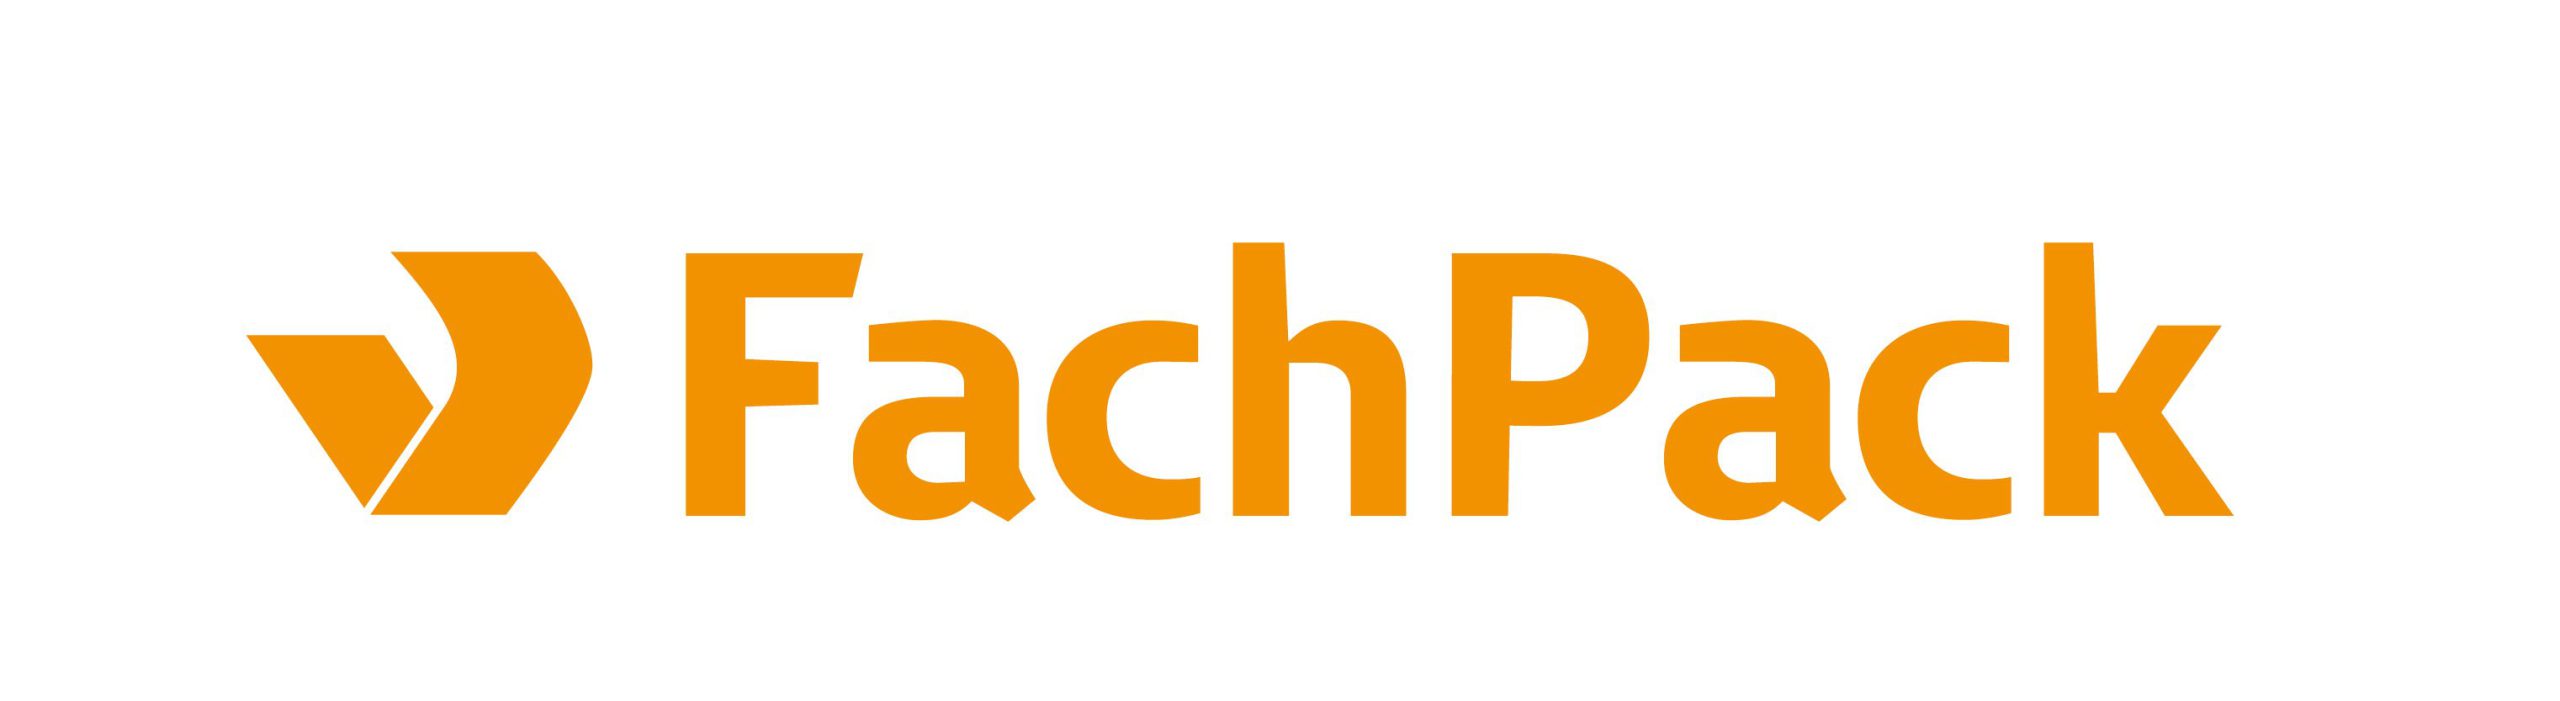 FachPack Messe Logo